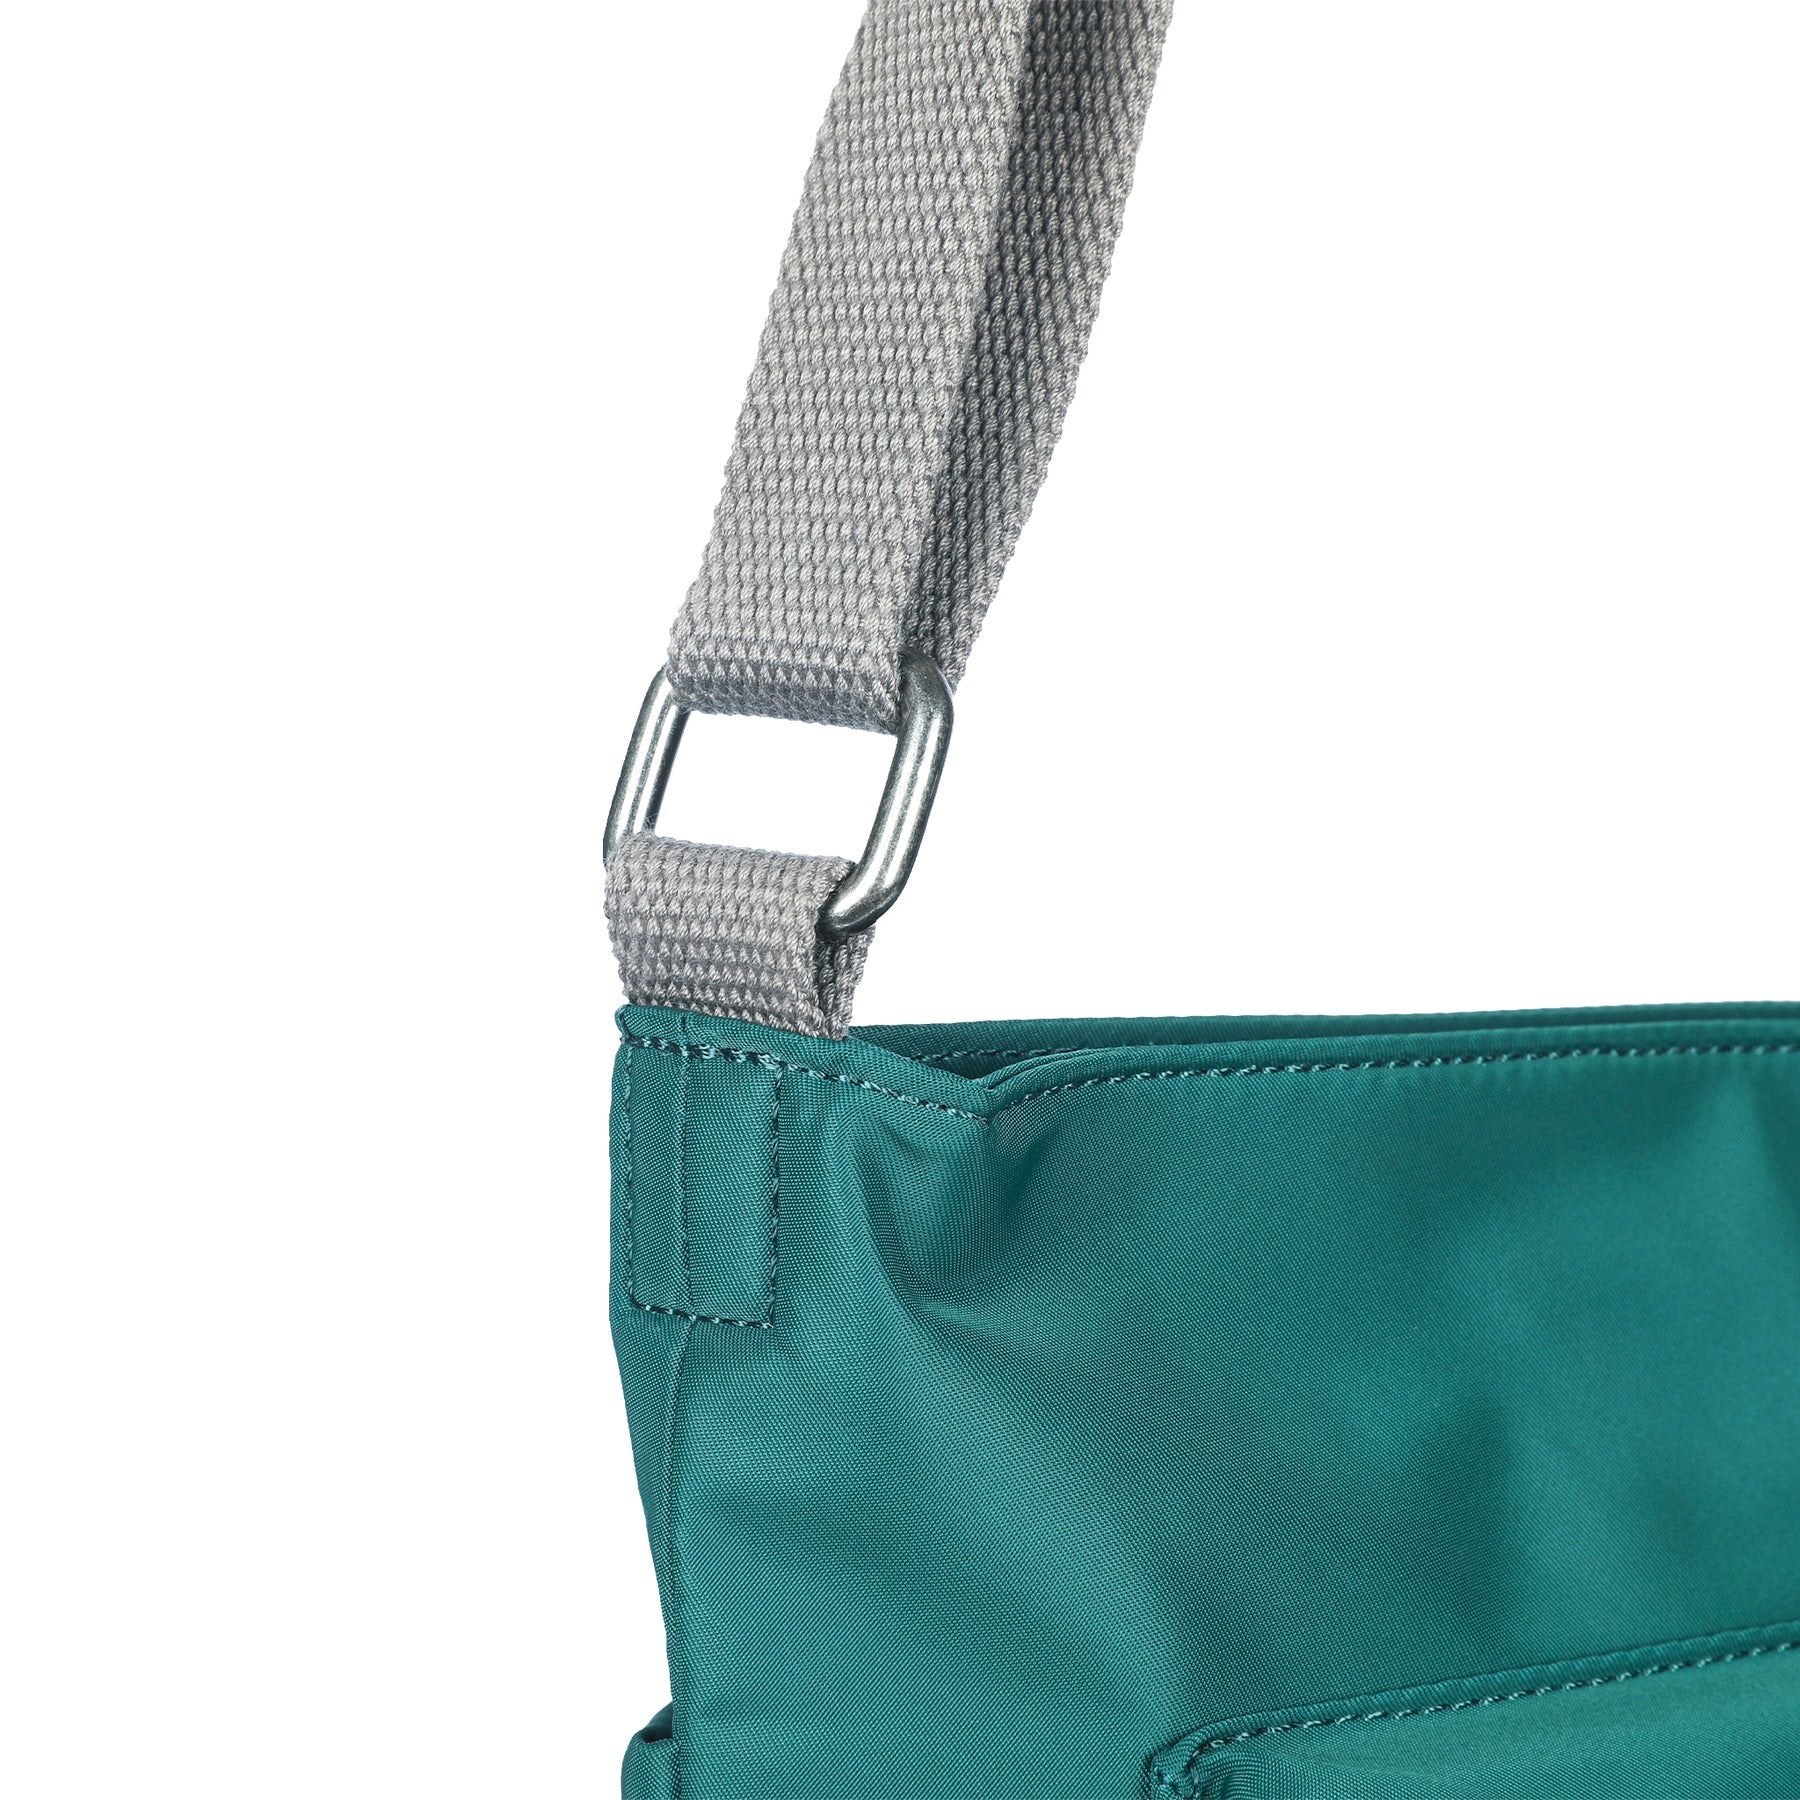 ROKA Kennington B Teal Medium Recycled Nylon Bag - OS